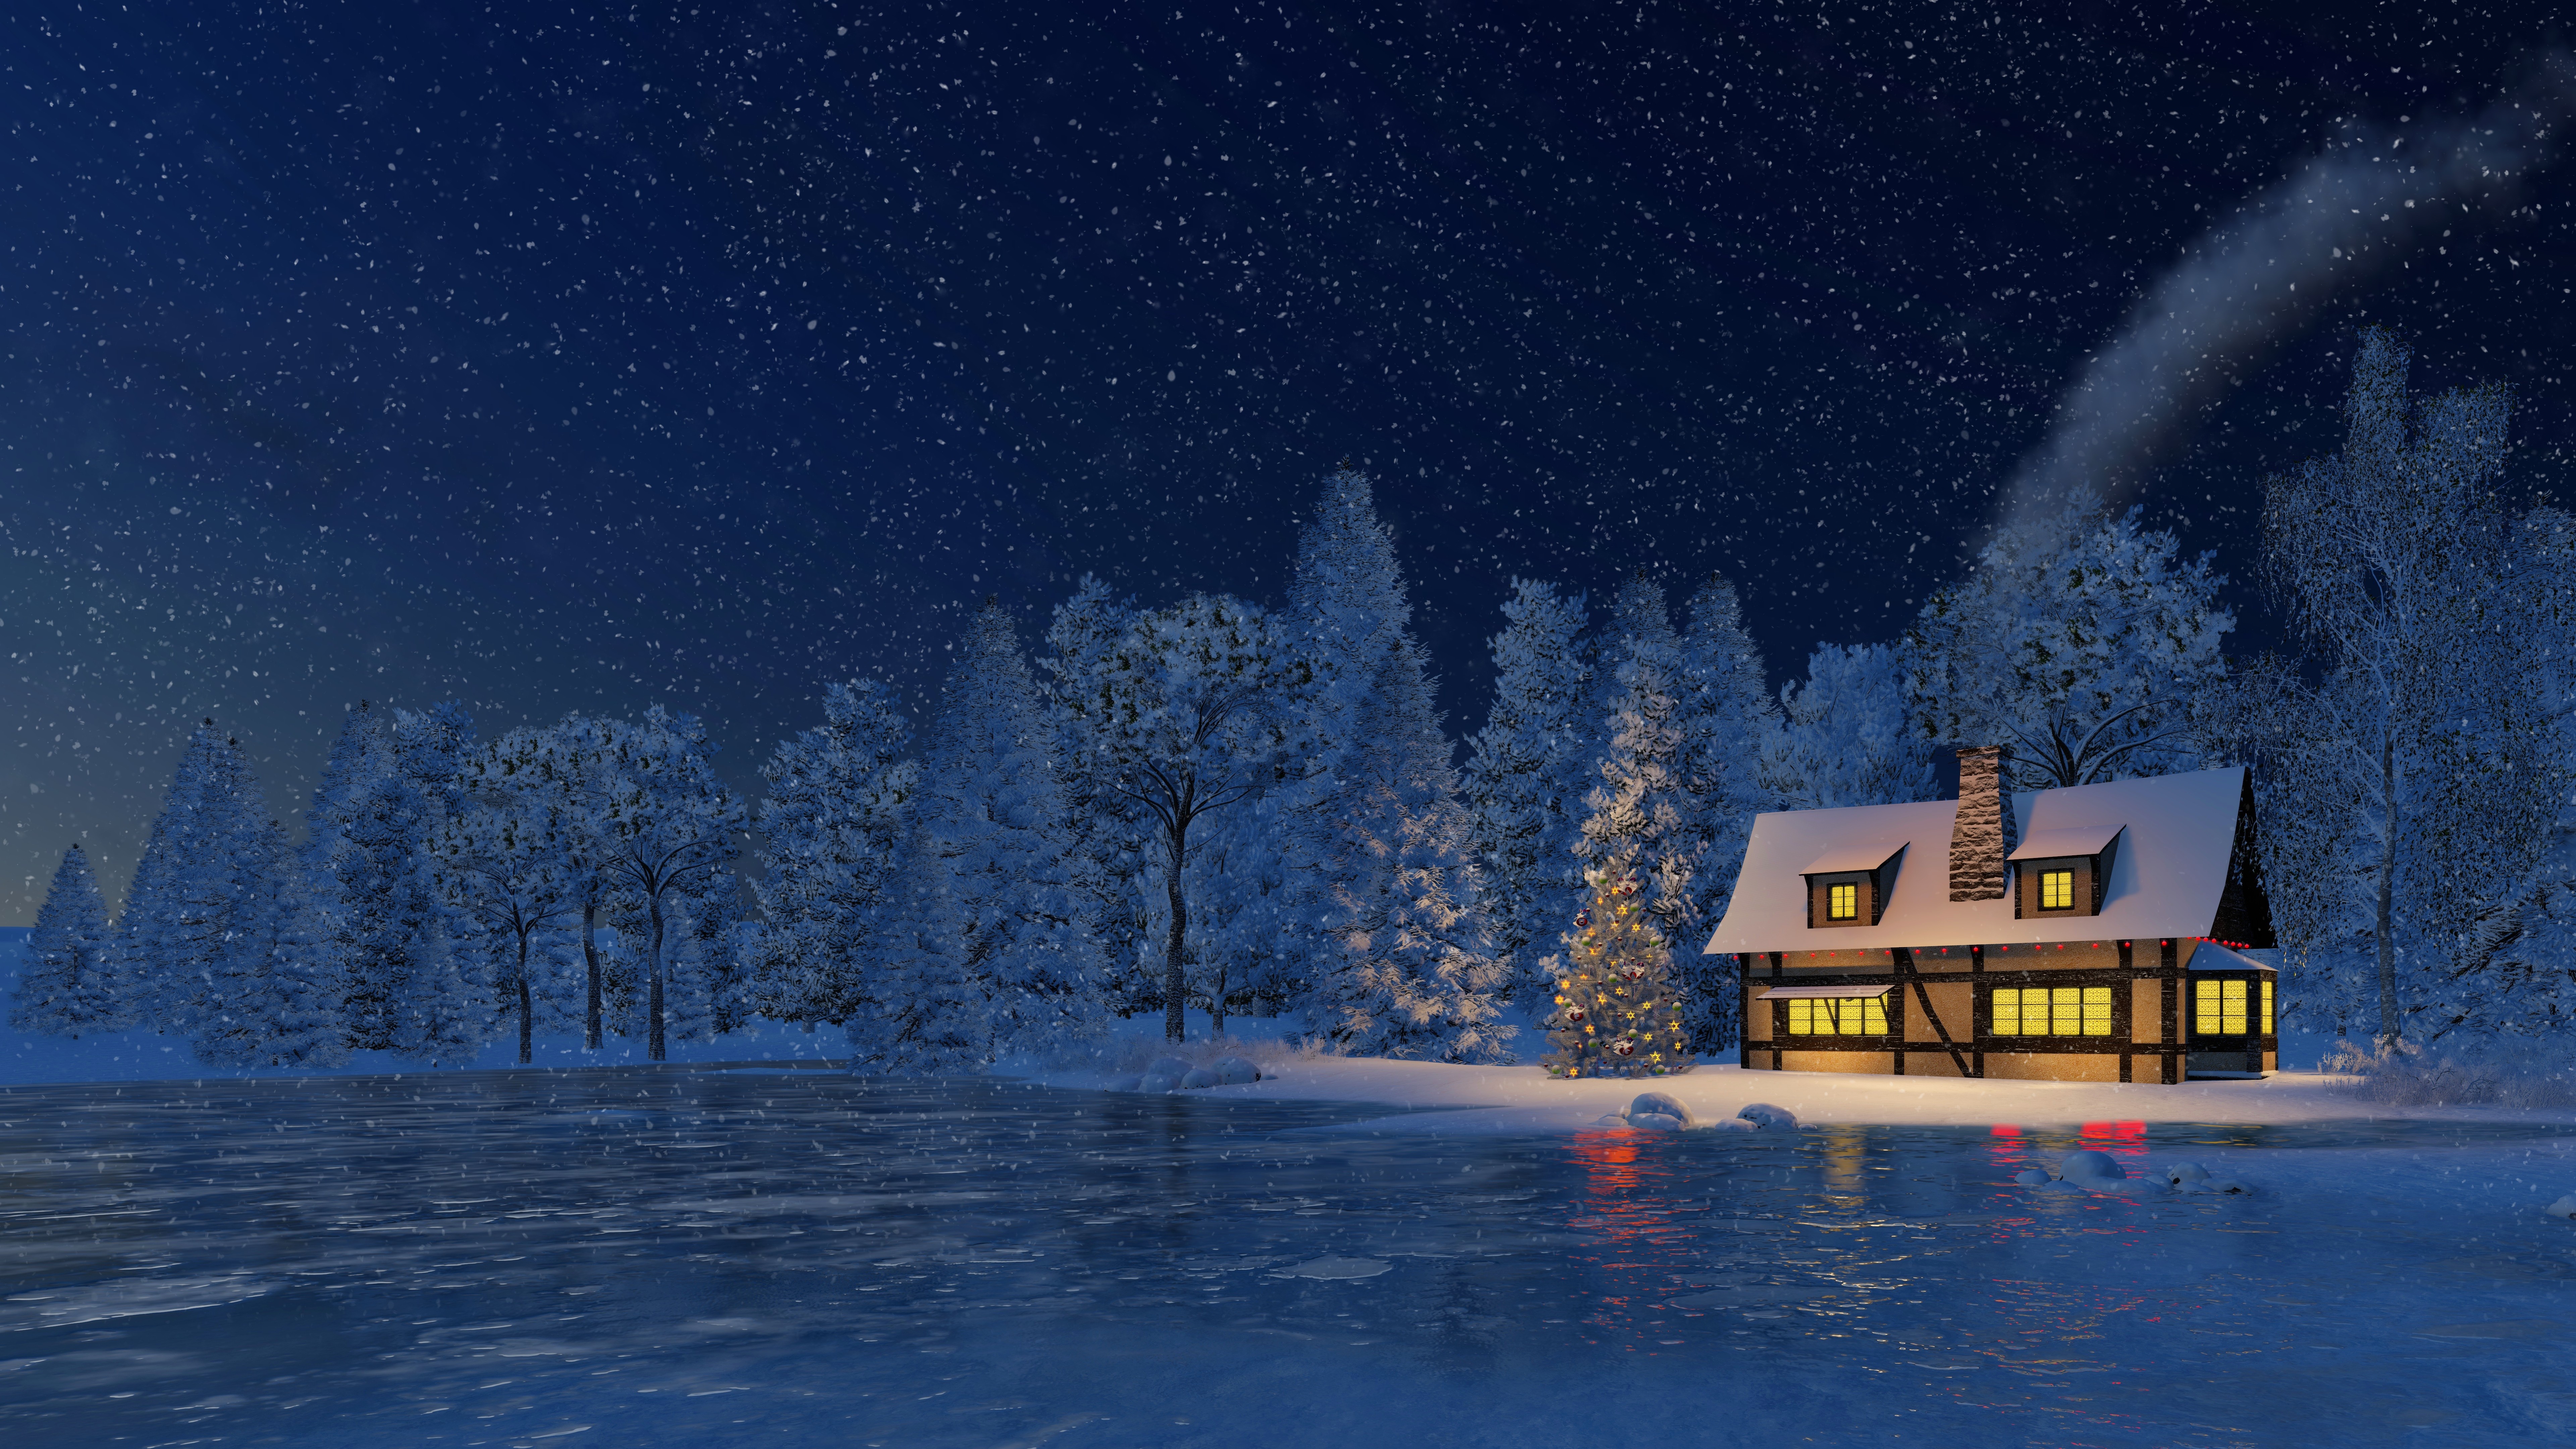 PCデスクトップに冬, 家, 雪, 湖, 芸術的画像を無料でダウンロード